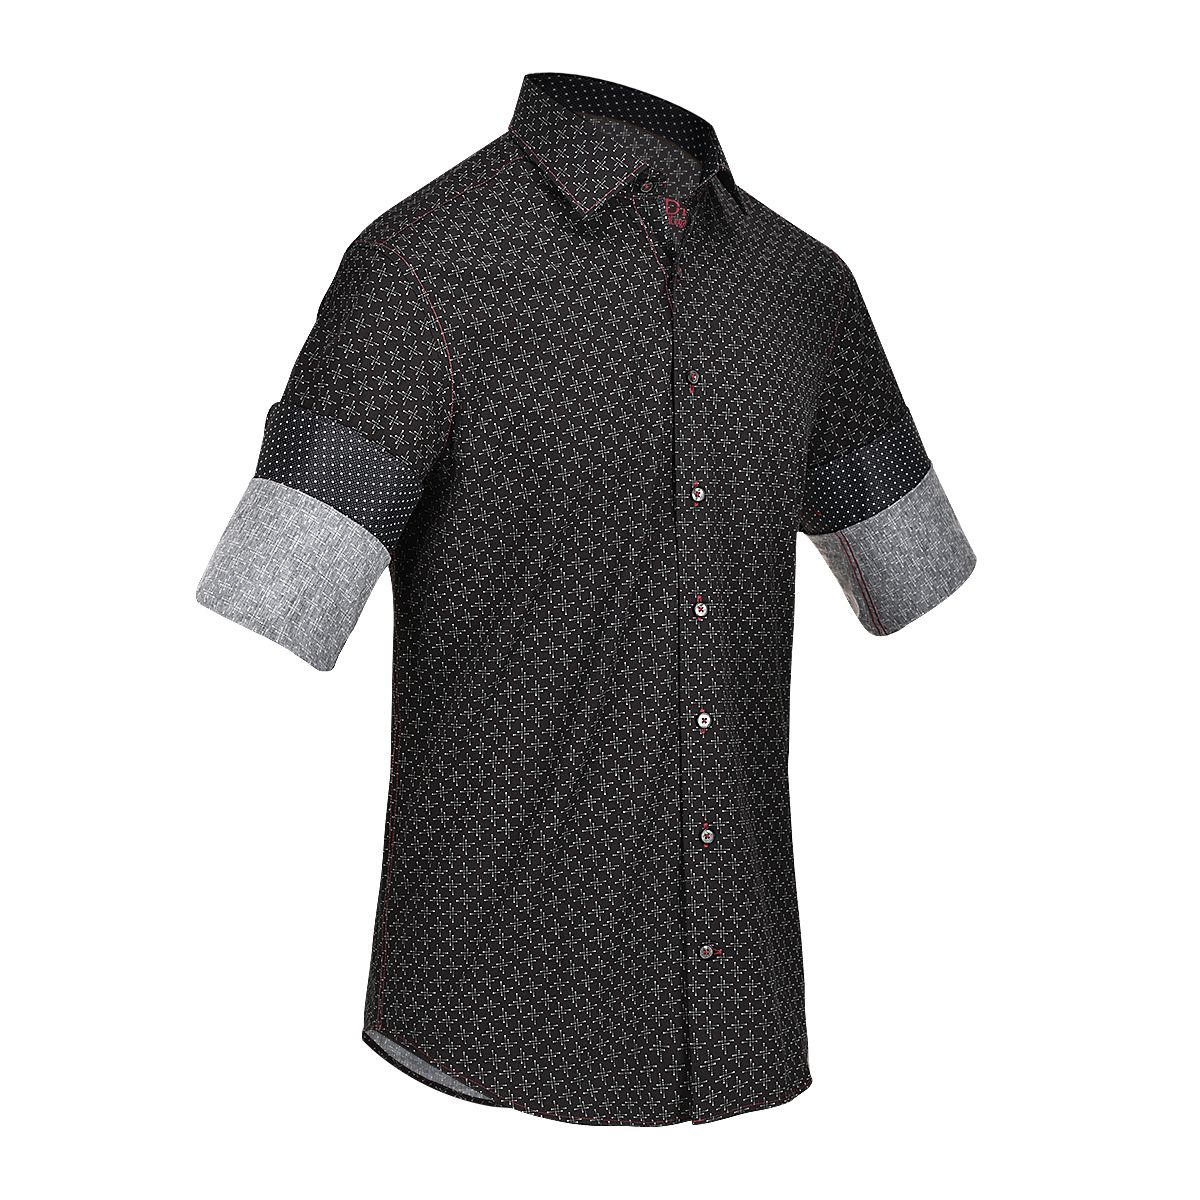 CM0W551 - Cuadra black casual fashion cotton shirt for men-Kuet.us